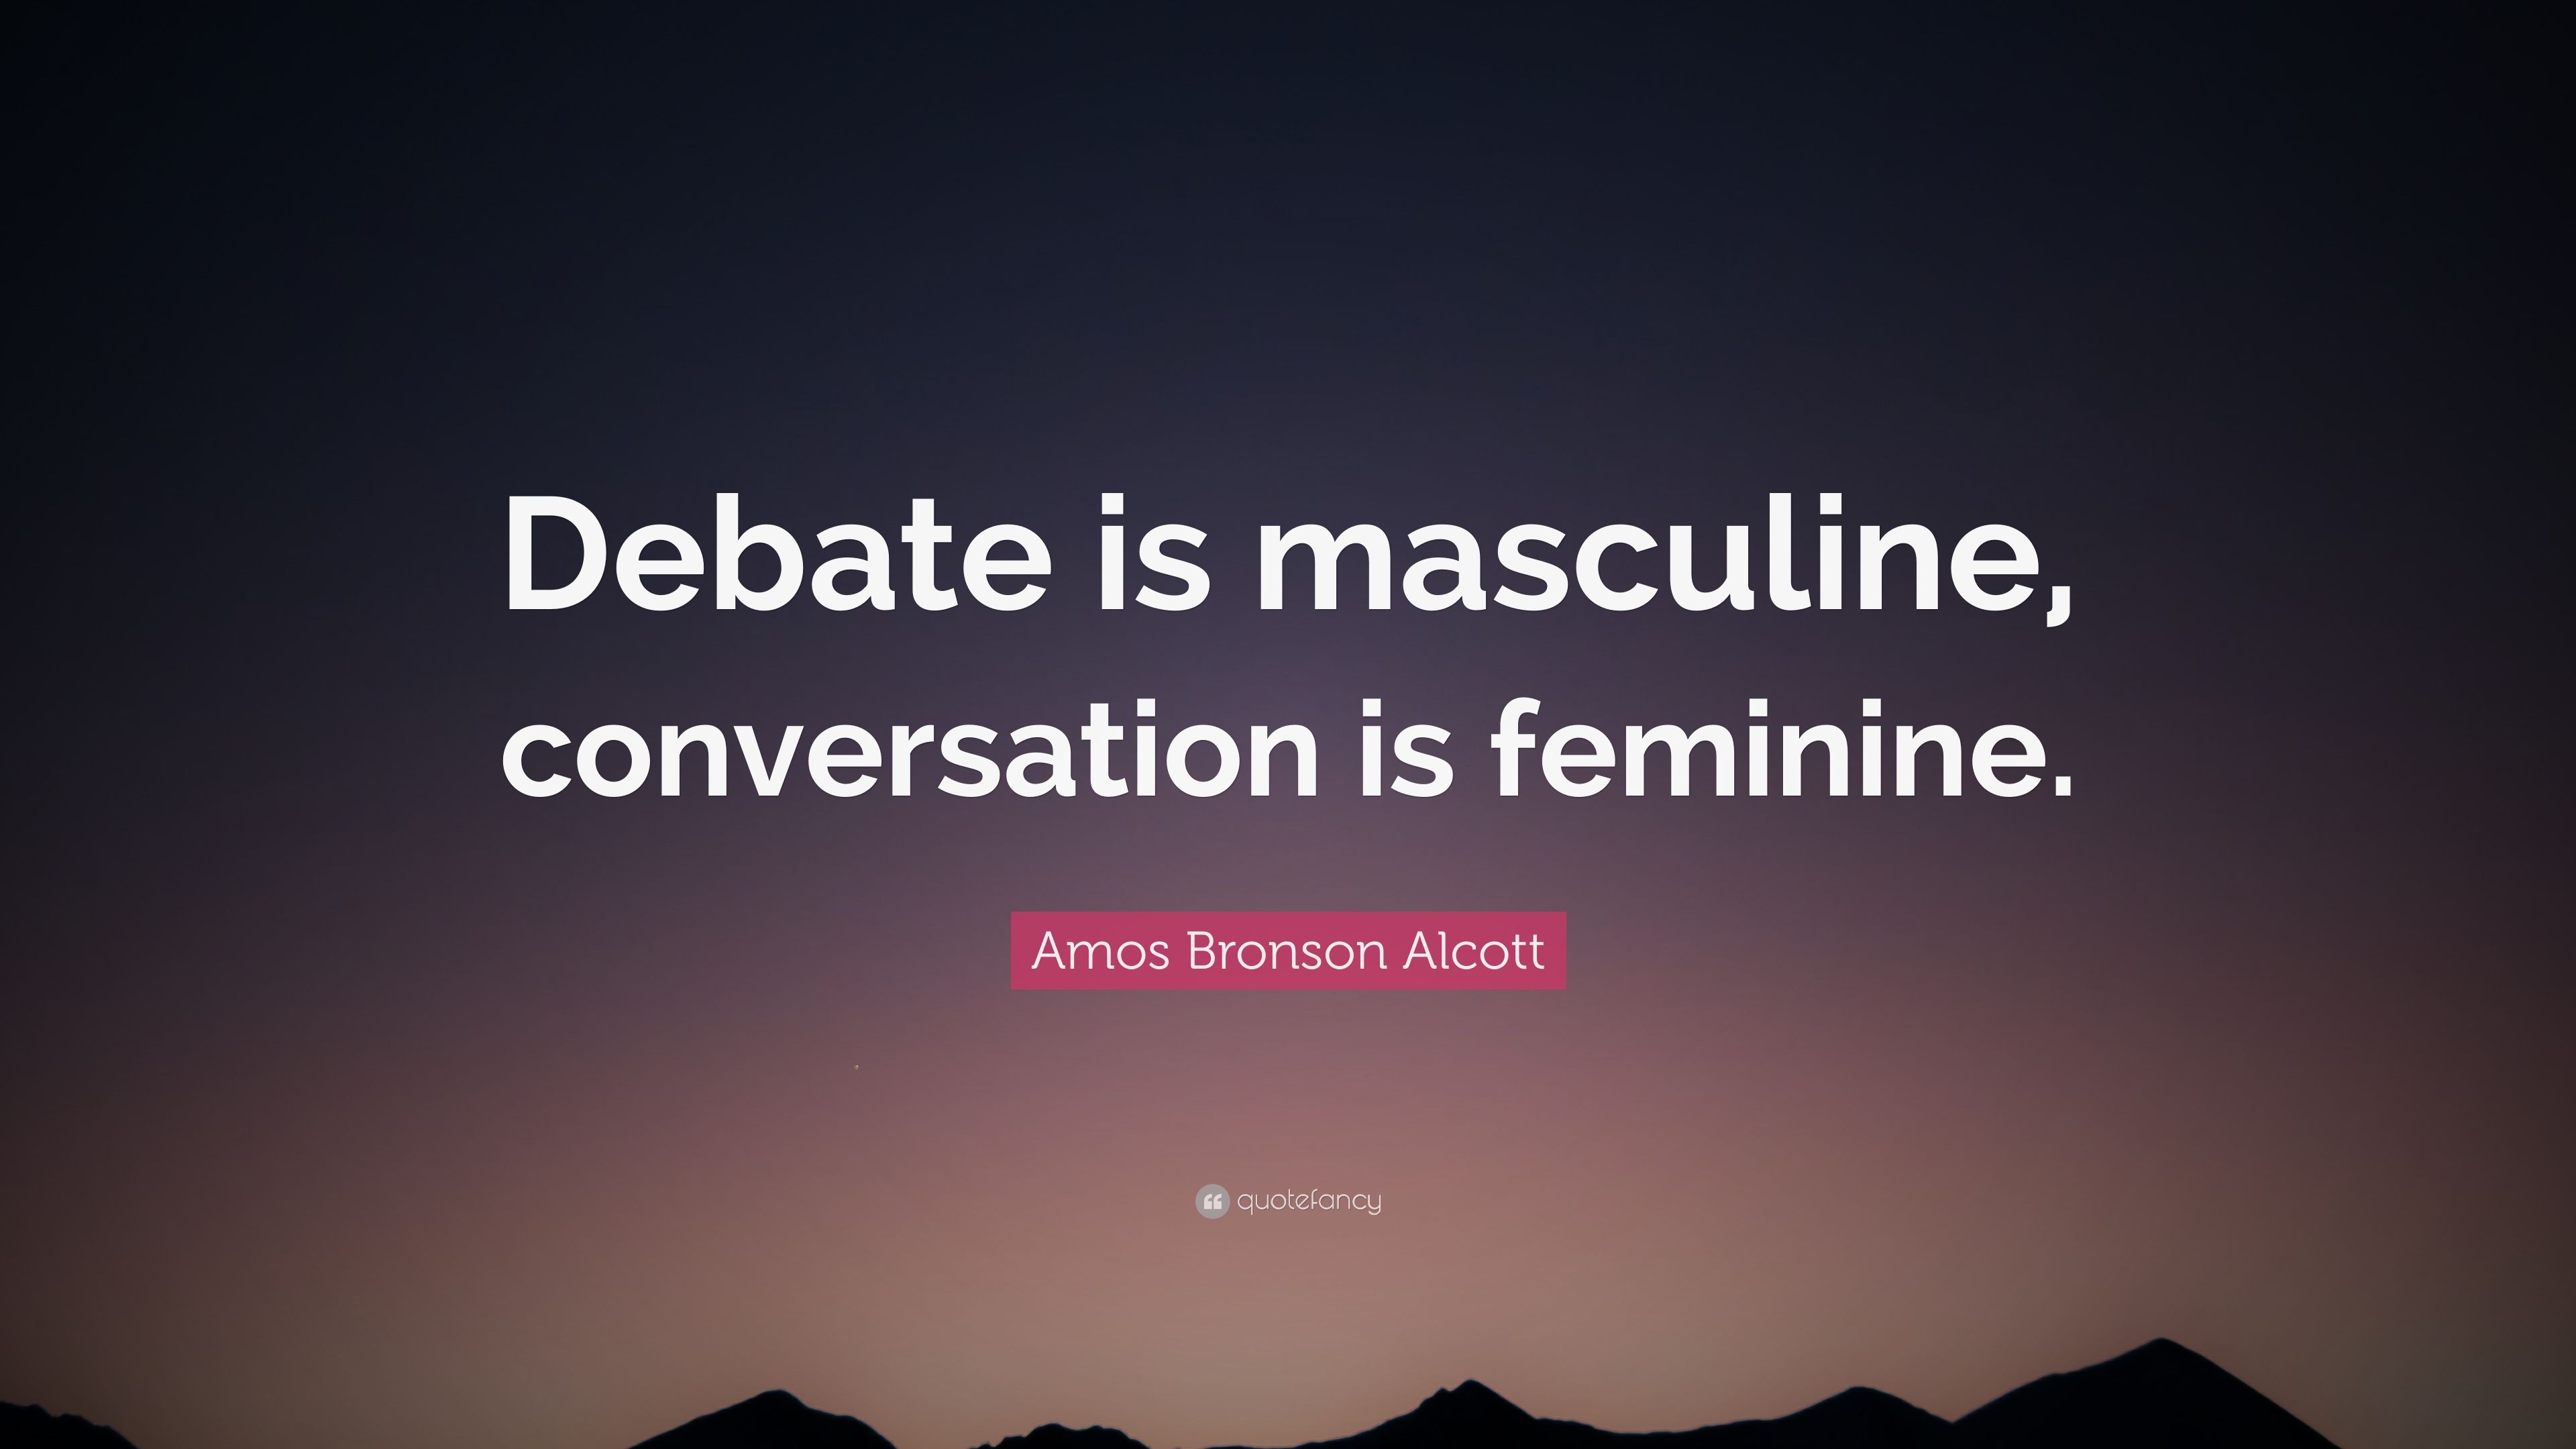 Amos Bronson Alcott Quote: “Debate is masculine, conversation is